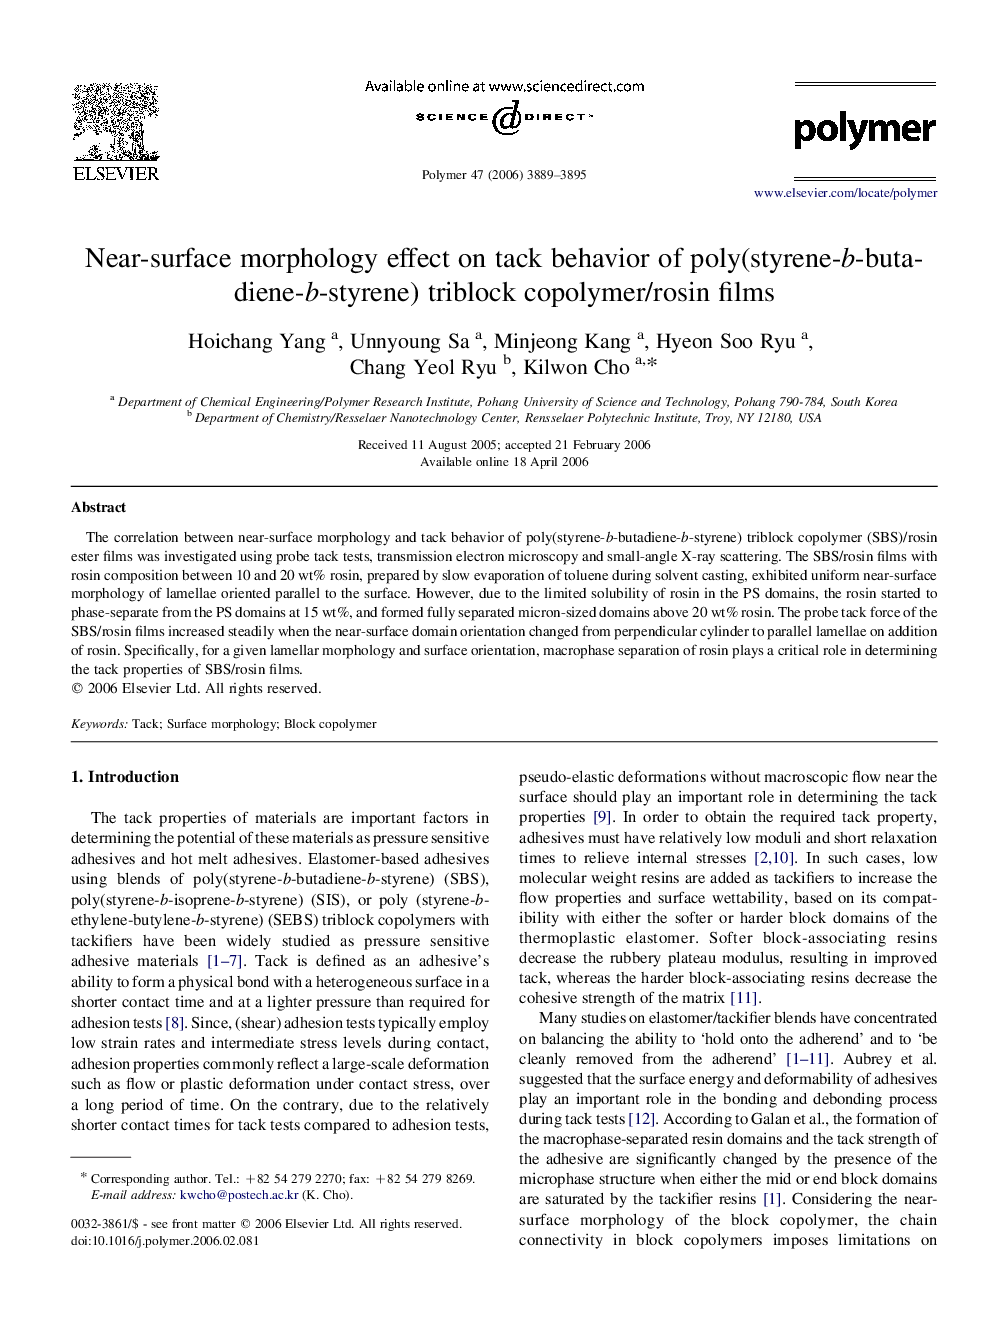 Near-surface morphology effect on tack behavior of poly(styrene-b-butadiene-b-styrene) triblock copolymer/rosin films